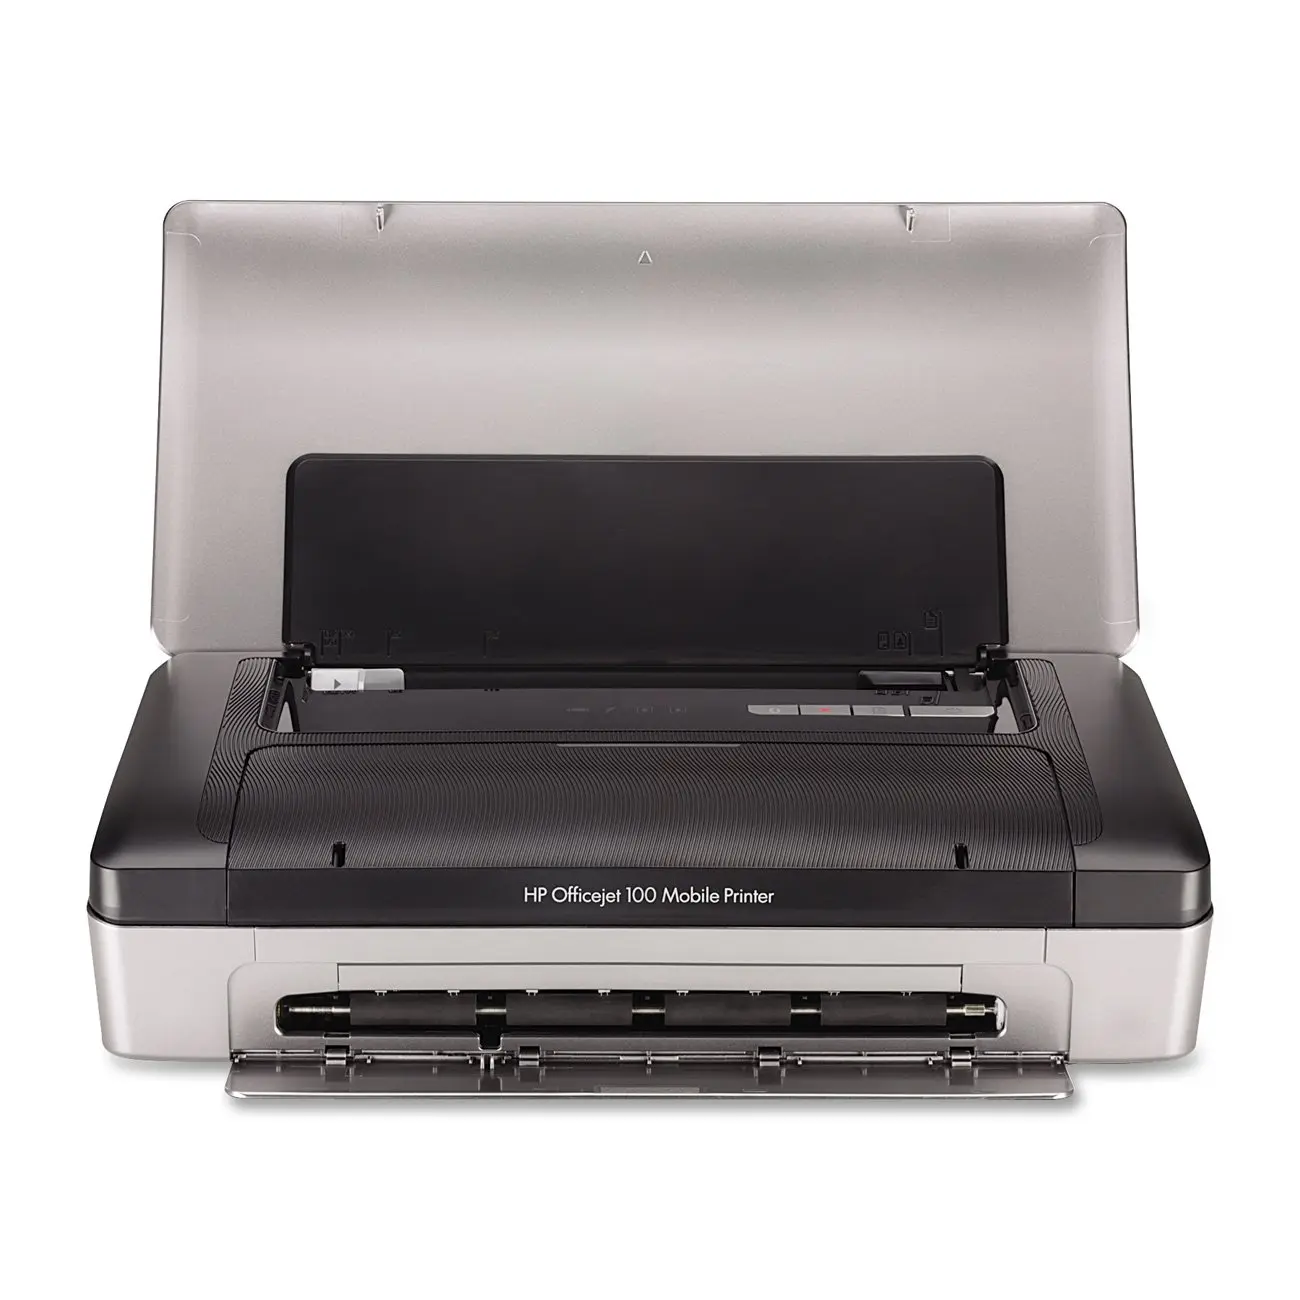 Hewlett packard officejet 100: ultimate portable printer